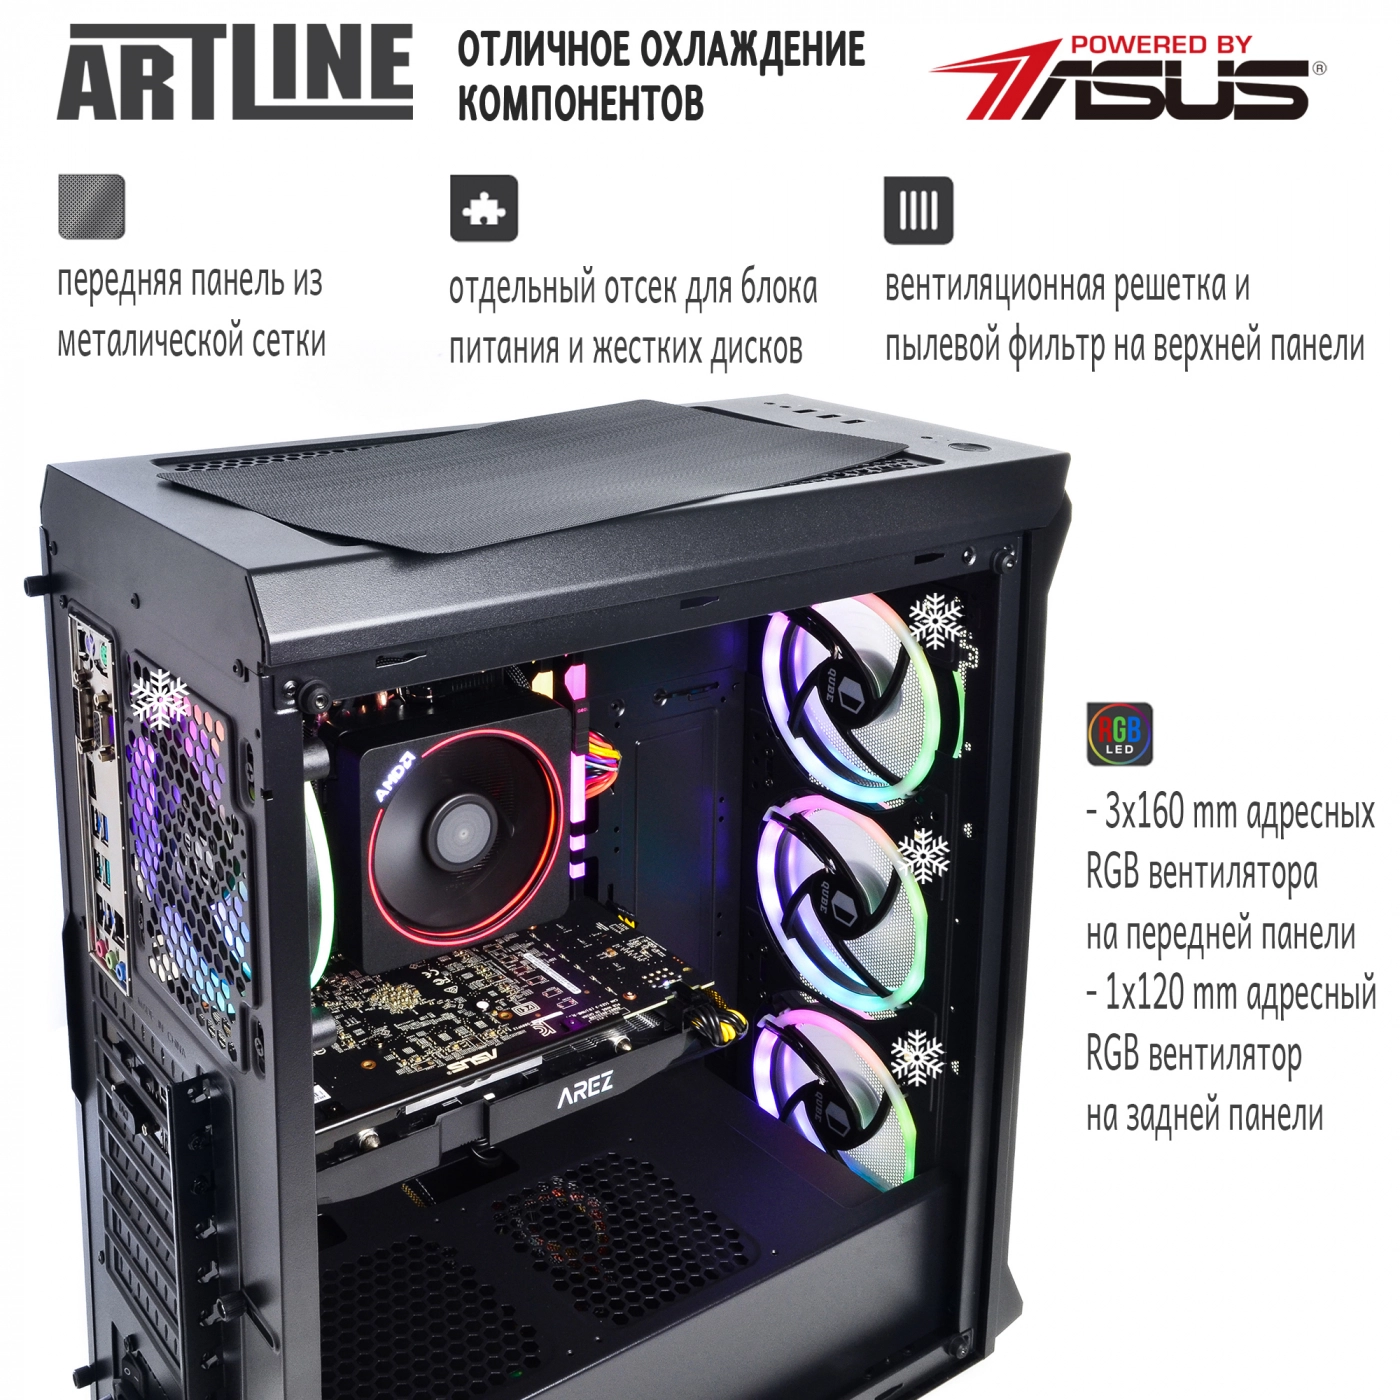 Купити Комп'ютер ARTLINE Gaming X87v21 - фото 2